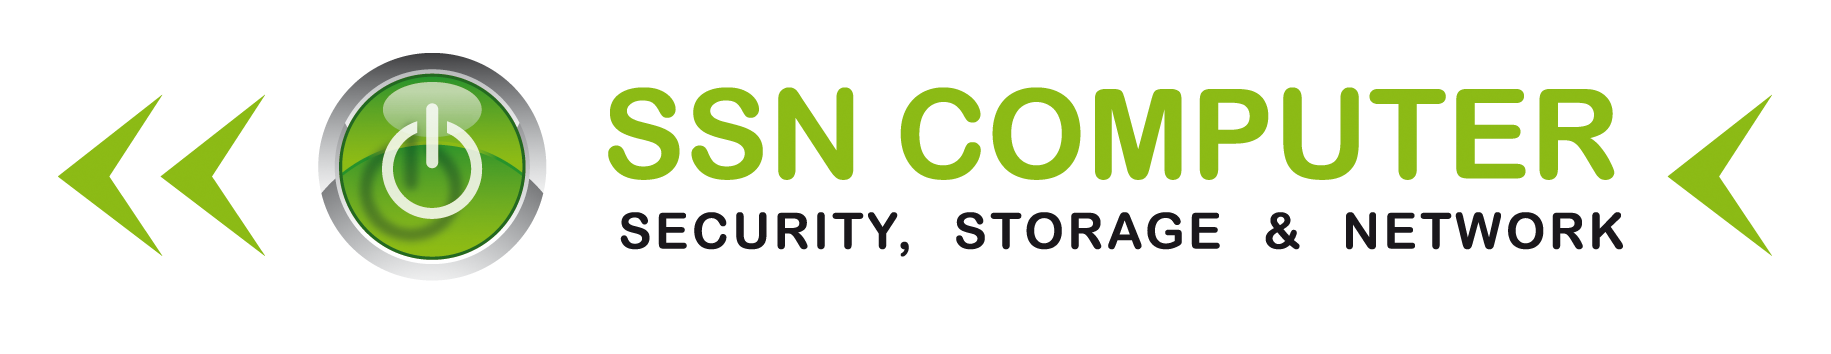 SSN Computer GmbH & Co.KG